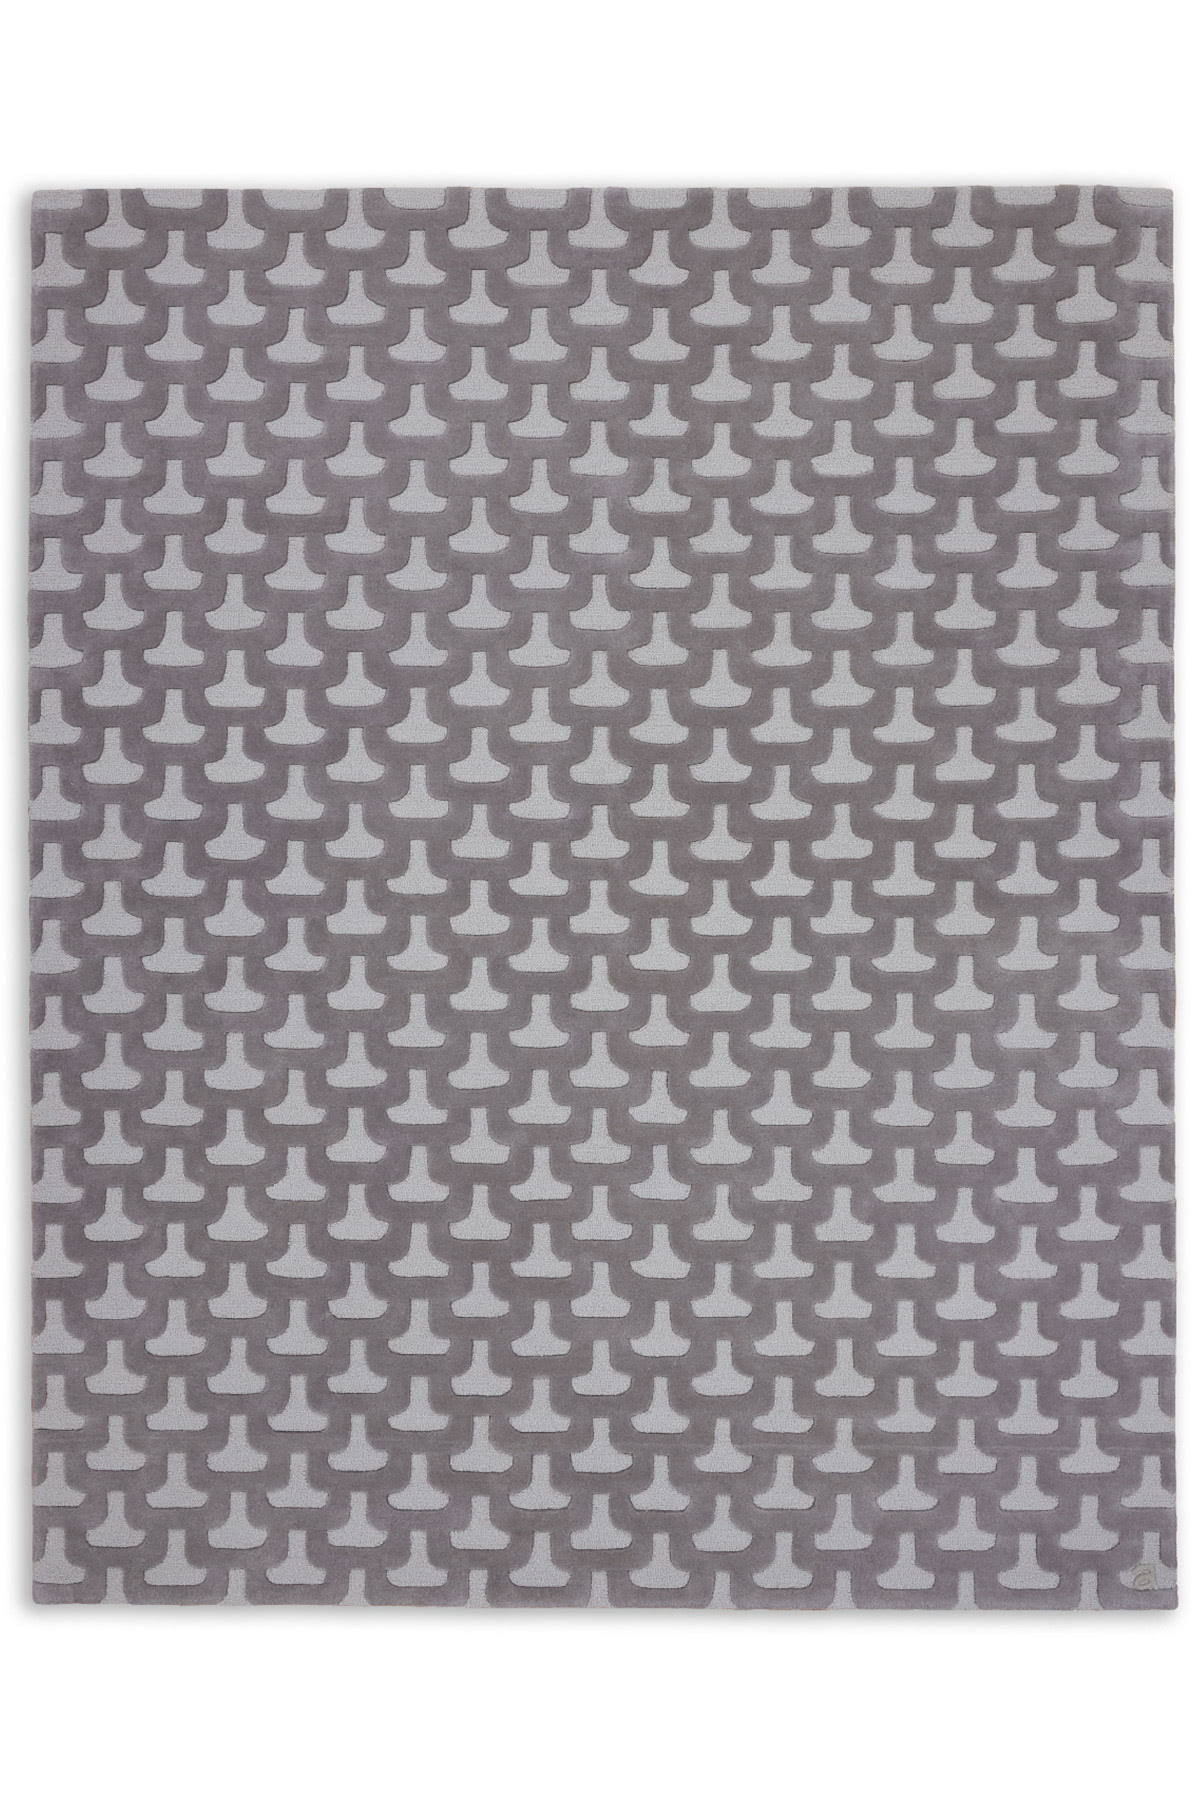 angela adams Betty Grey contemporary modern rug